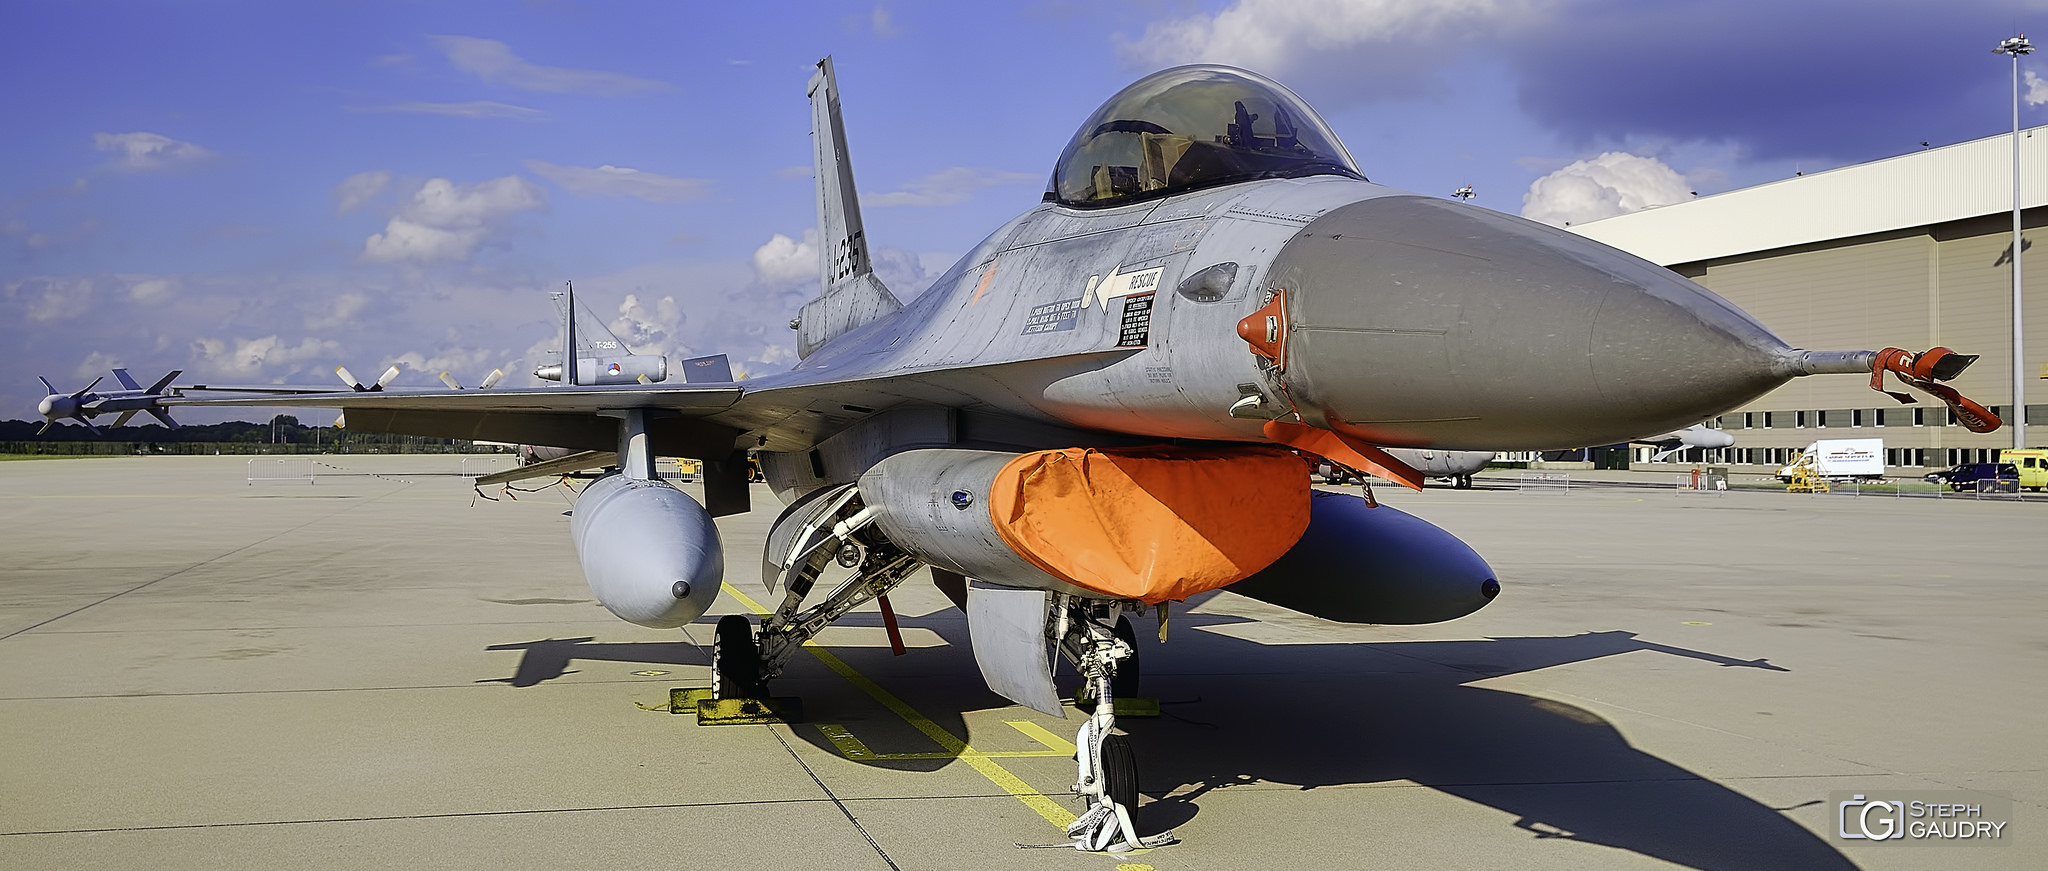 Machines volantes / EHEH - F-16 Fighting Falcon